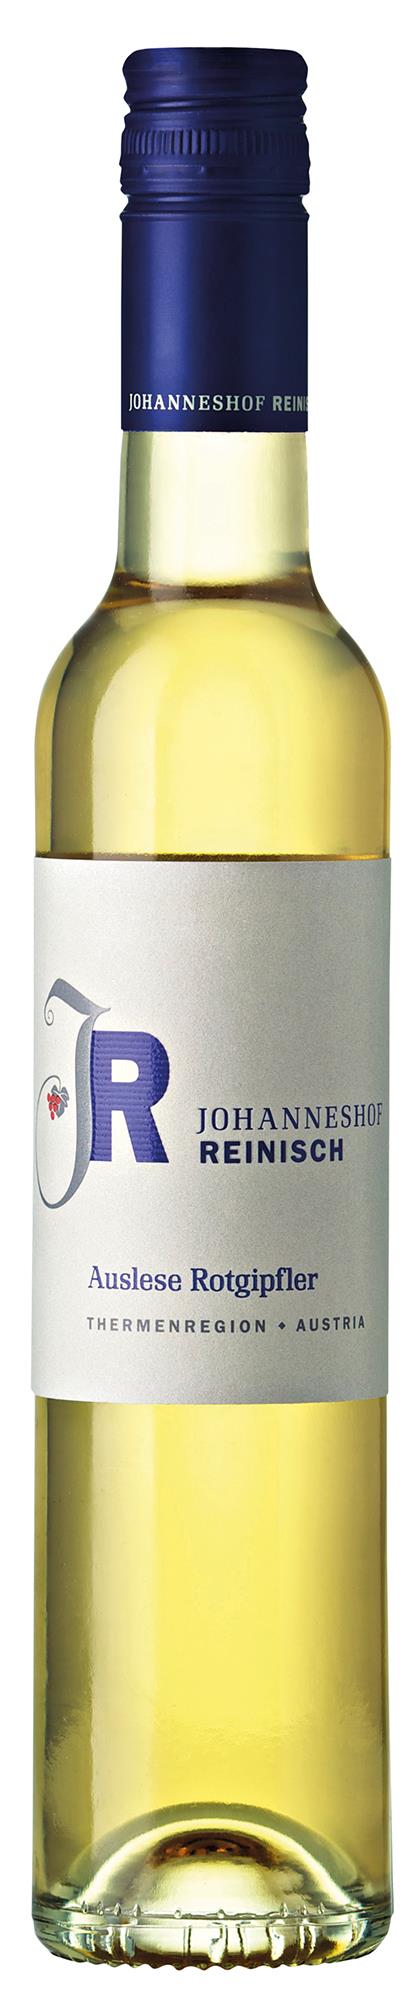 AUSLESE ROTGIPFLER ØKO Thermenregion, Johanneshof Reinisch 8% 37,50cl